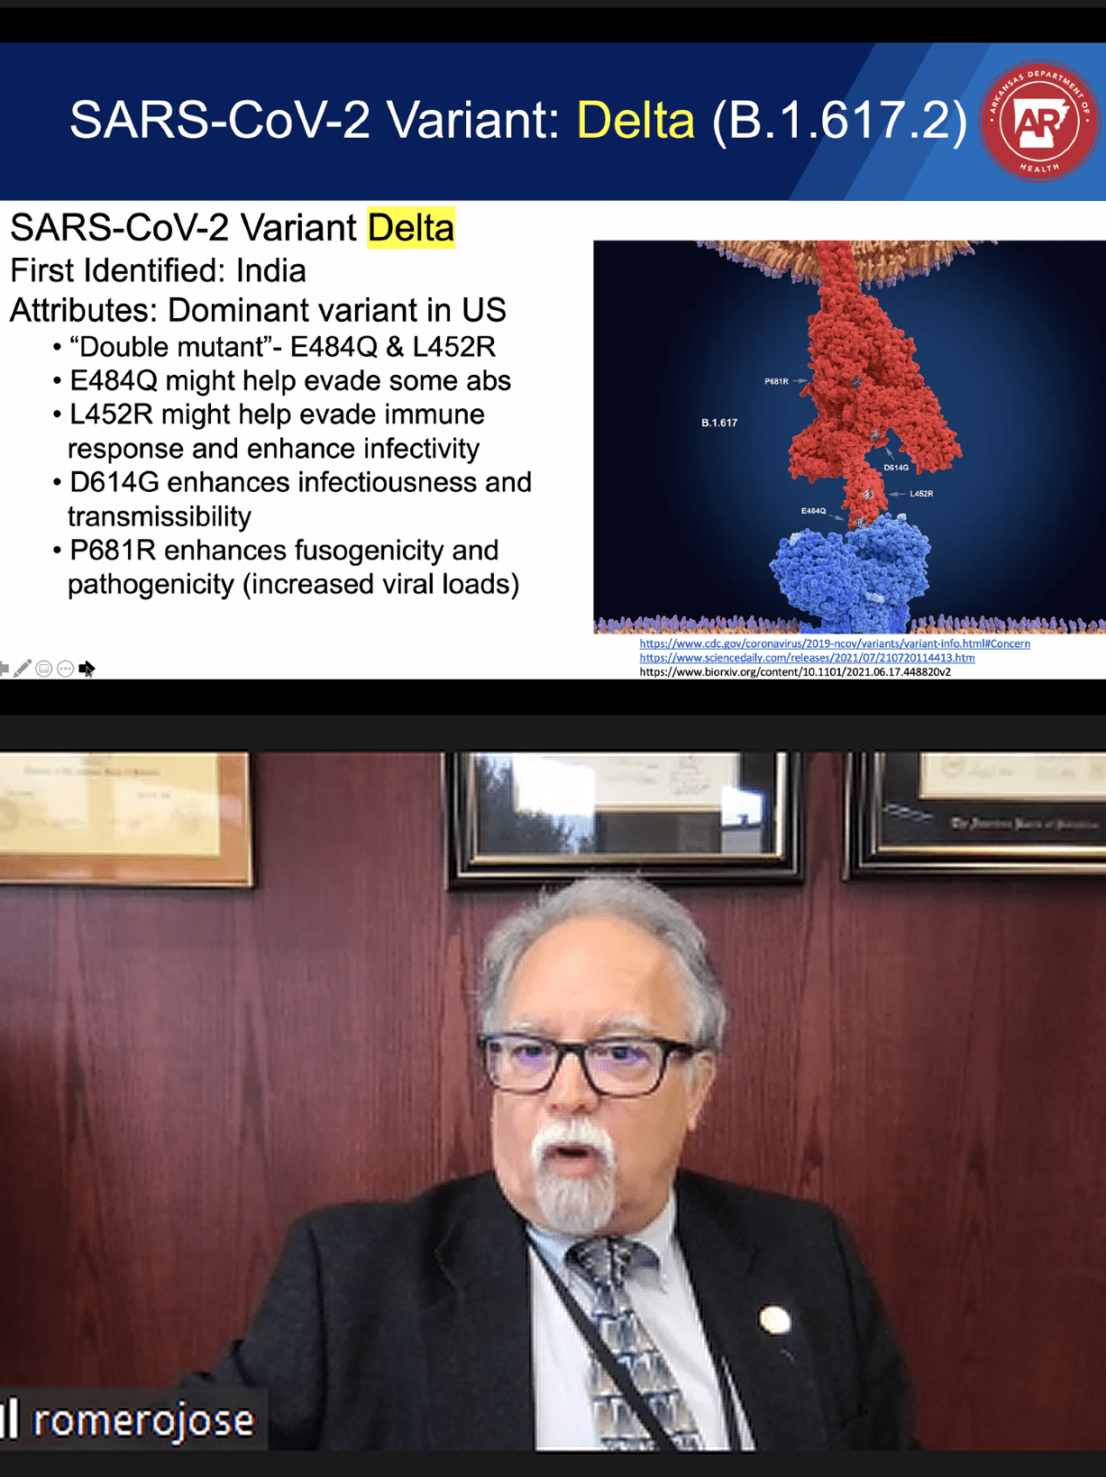 Dr. Jose Romero describes the Delta variant.